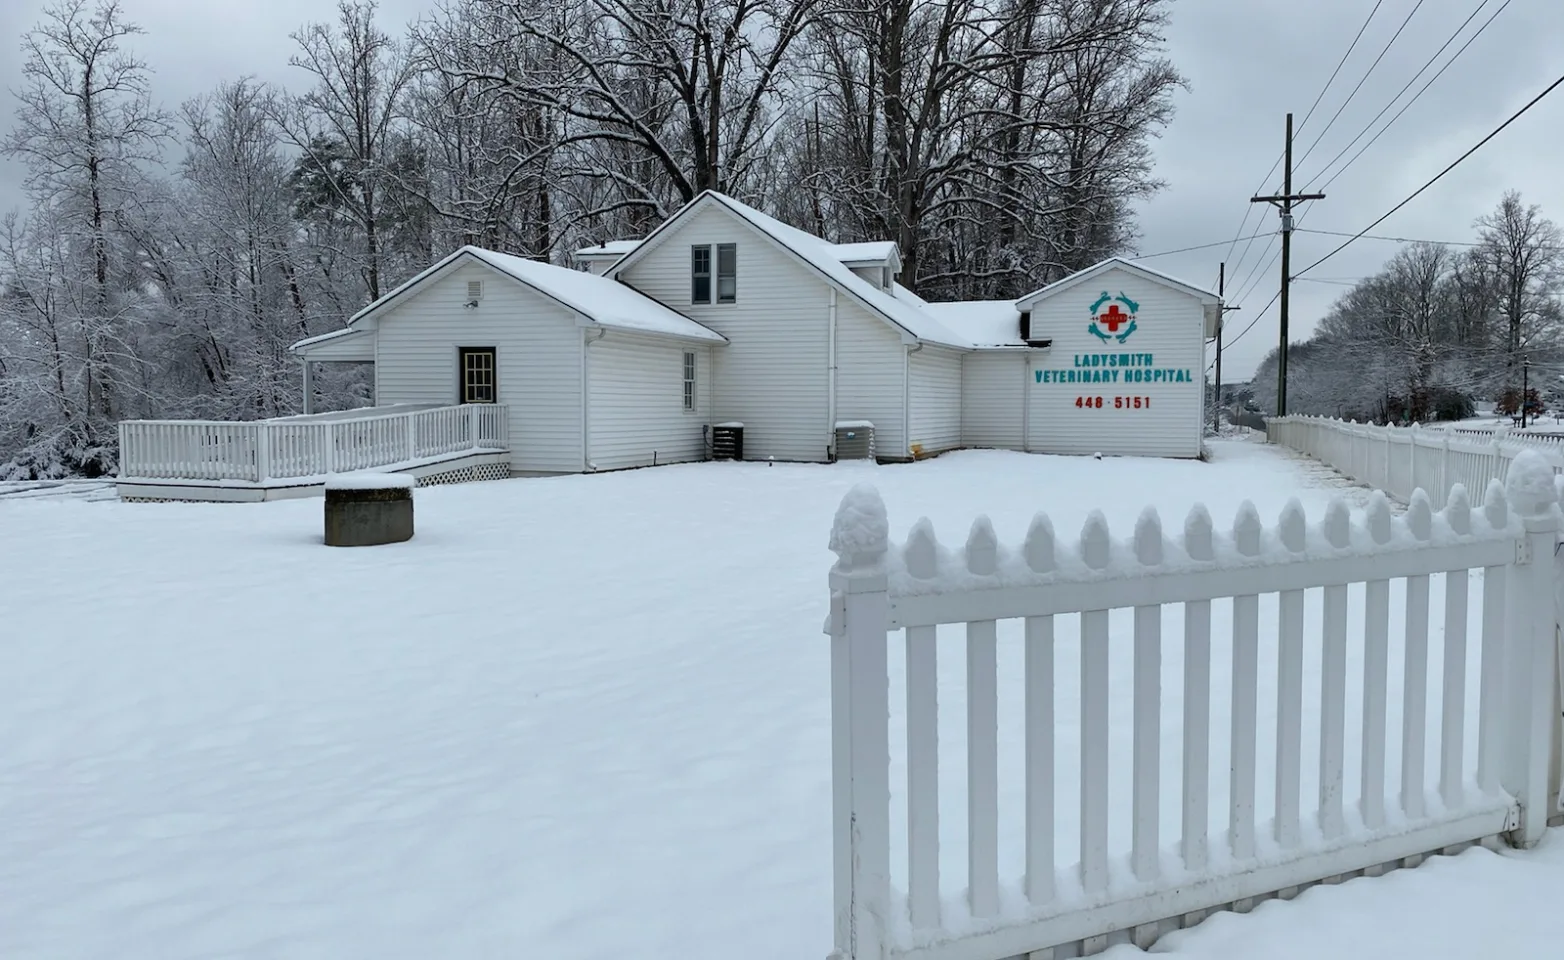 Ladysmith Veterinary Hospital covered in snow